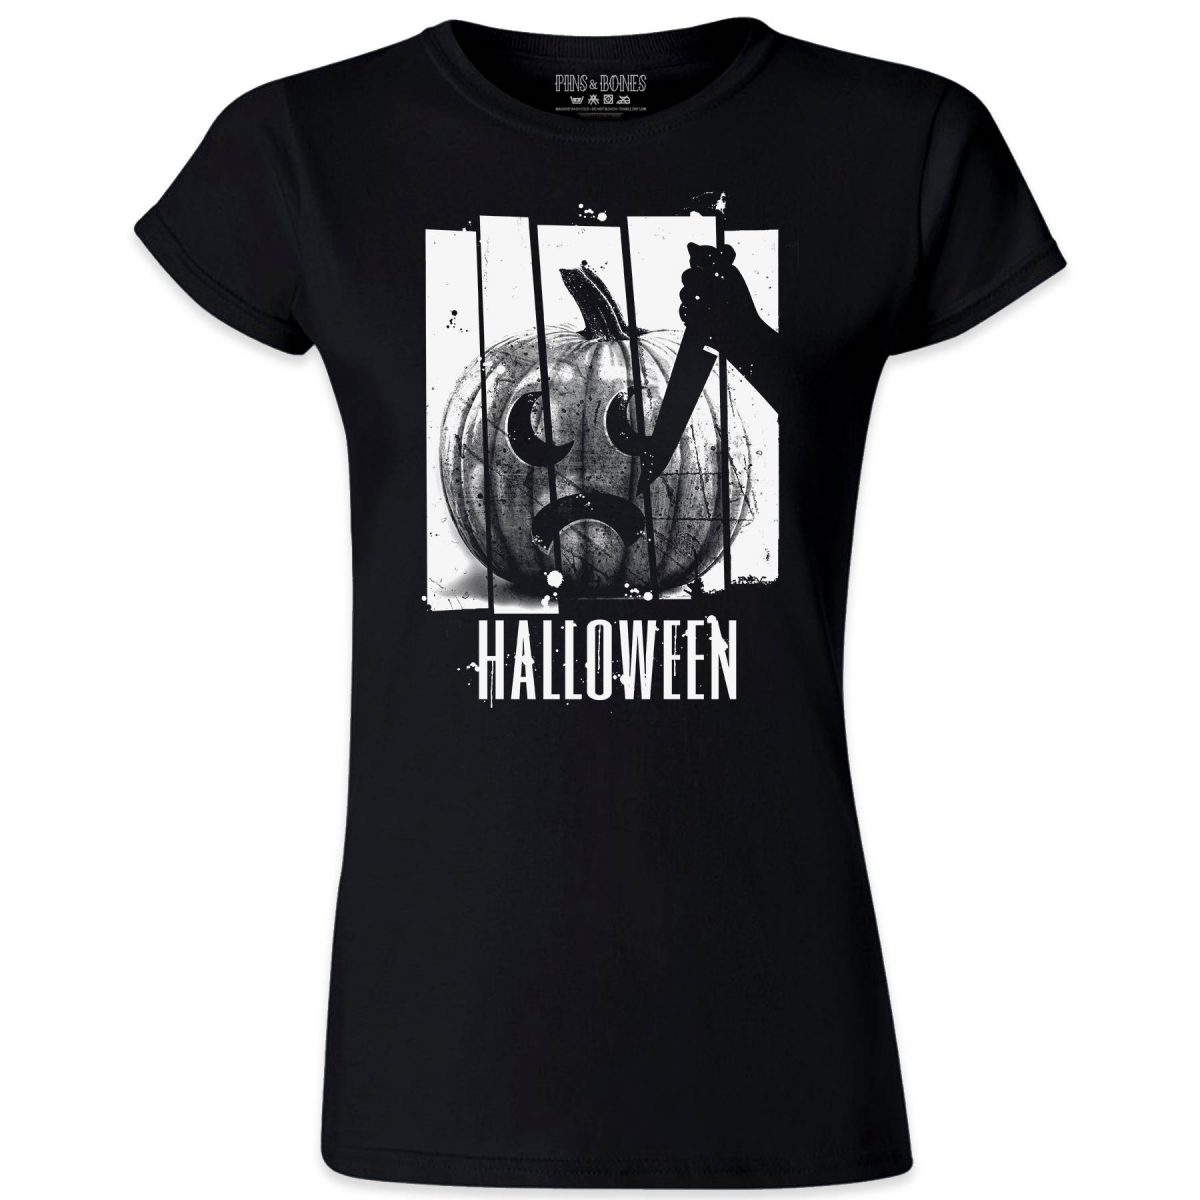 Pins & Bones Halloween Shirt, Pumpkin Shirt, Psycho Inspired Funny ...